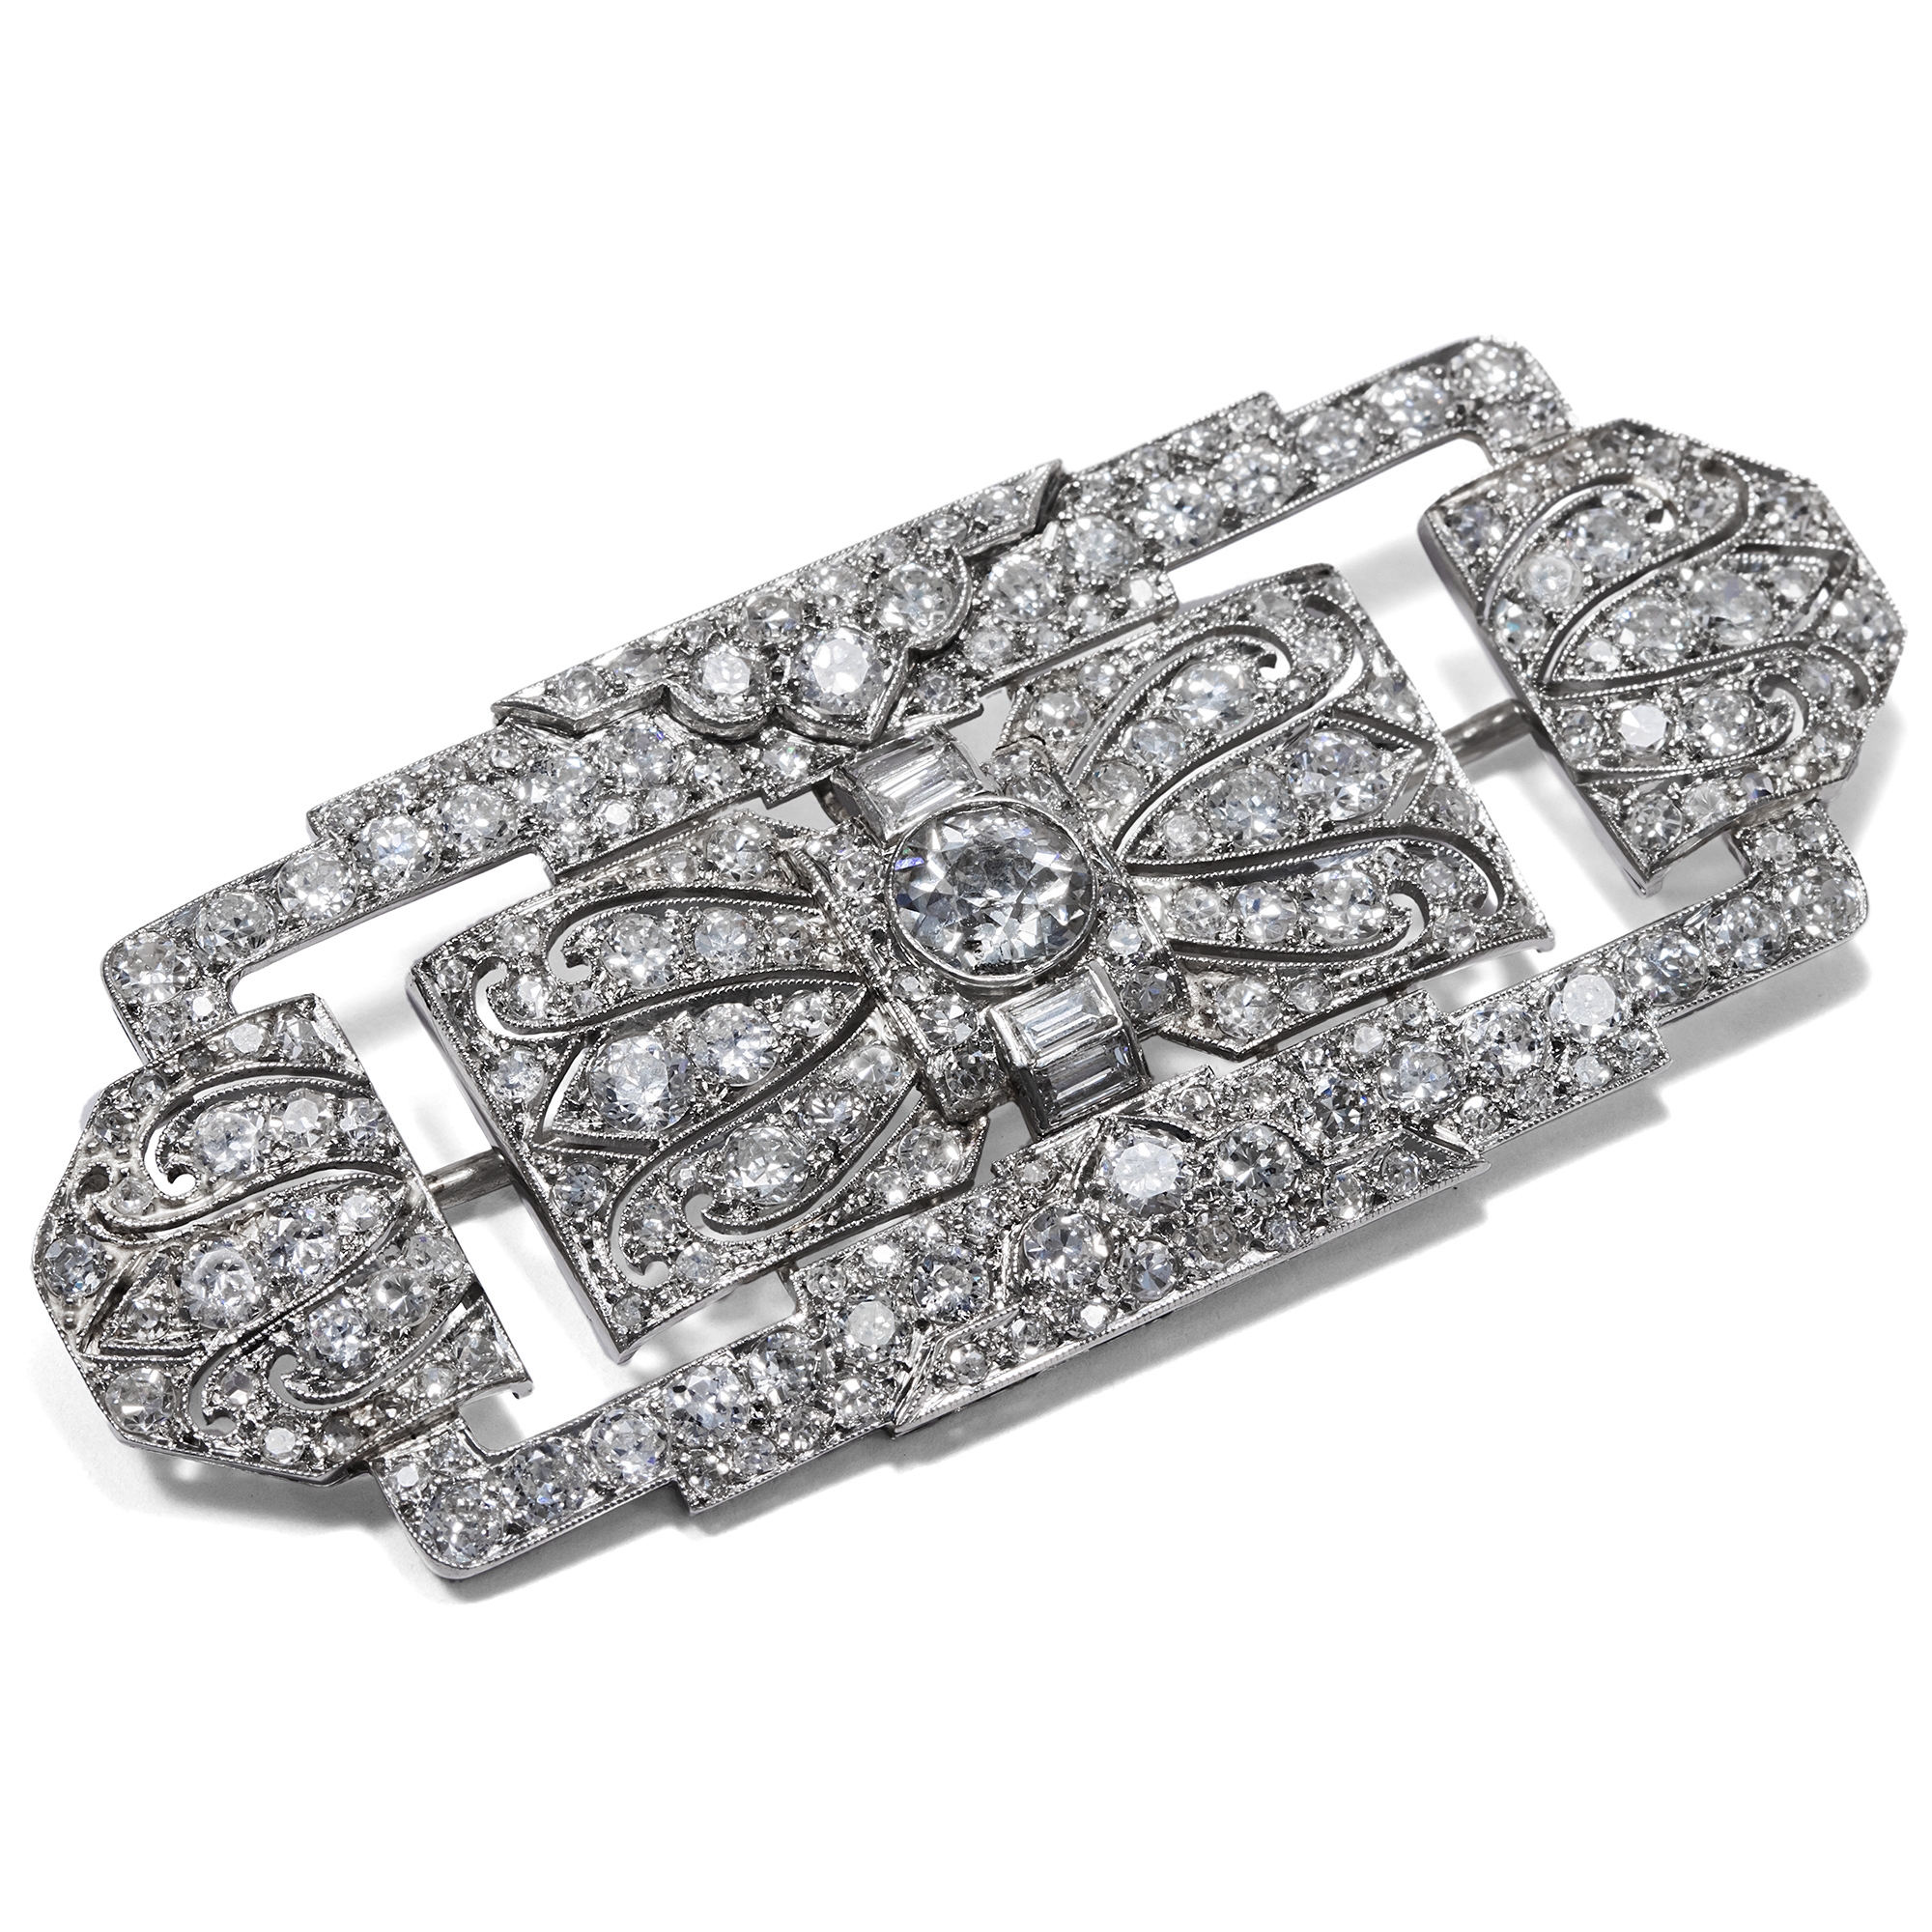 Stunning Brooch With Diamonds in Platinum, Around 1930